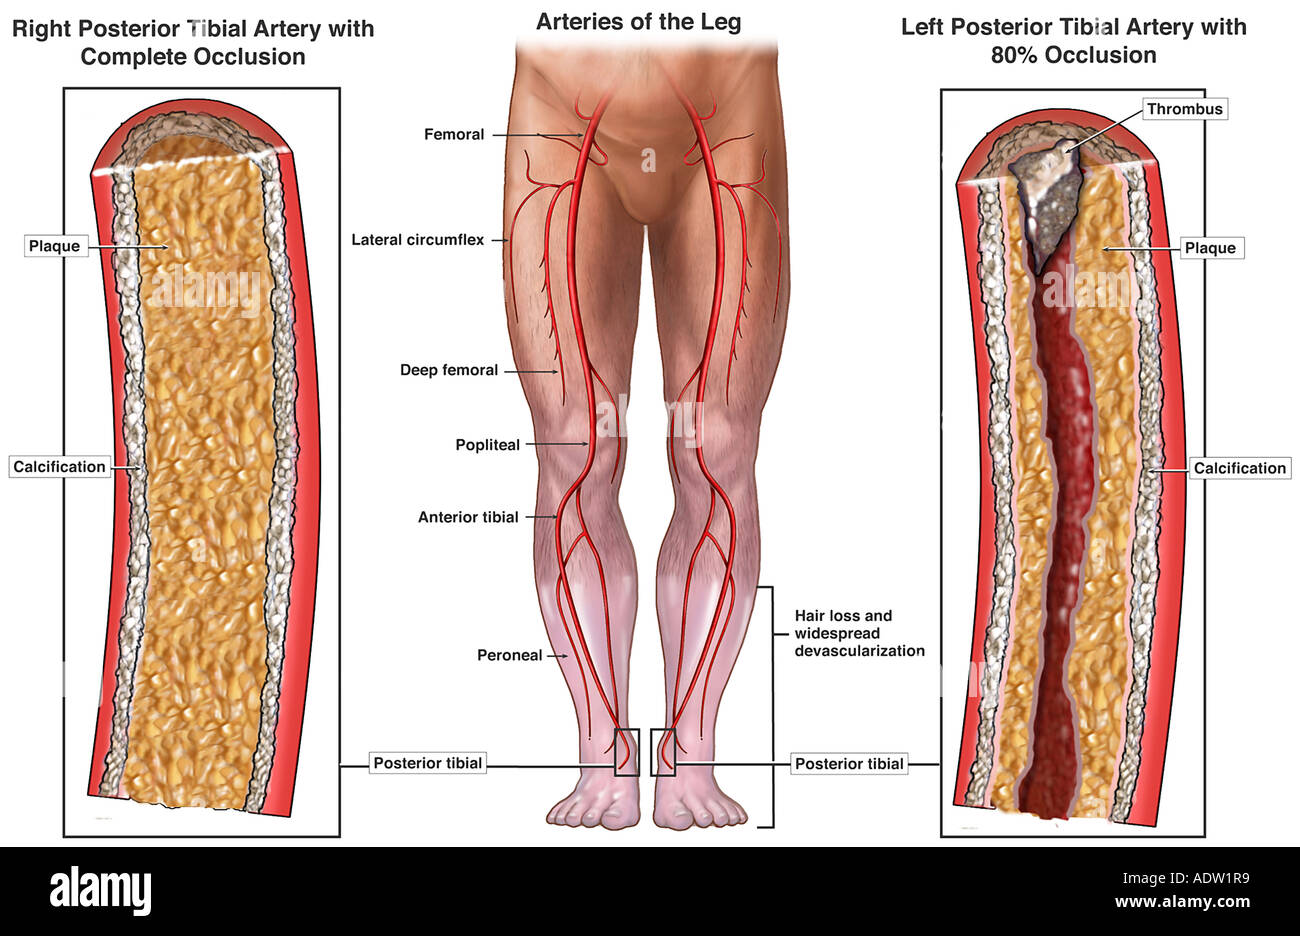 Blood Vessel Blockage Of The Lower Legs Stock Photo 7711288 Alamy